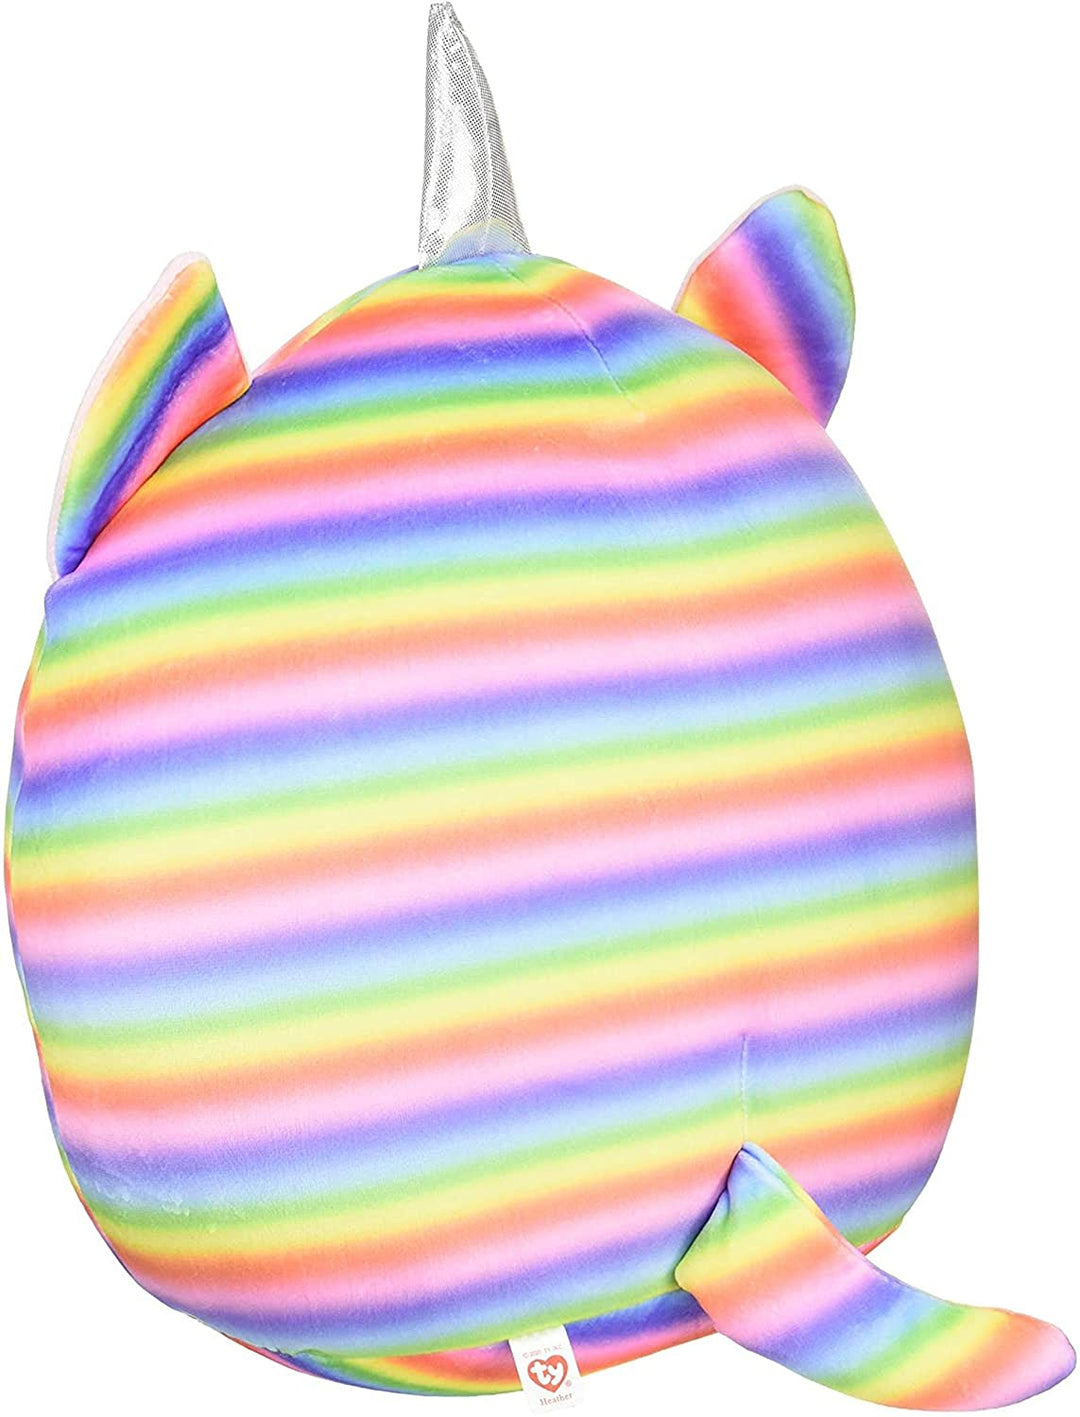 Ty UK Ltd 39189 Heather Cat Squish A Boo Plush Toy, Multicoloured, 12"